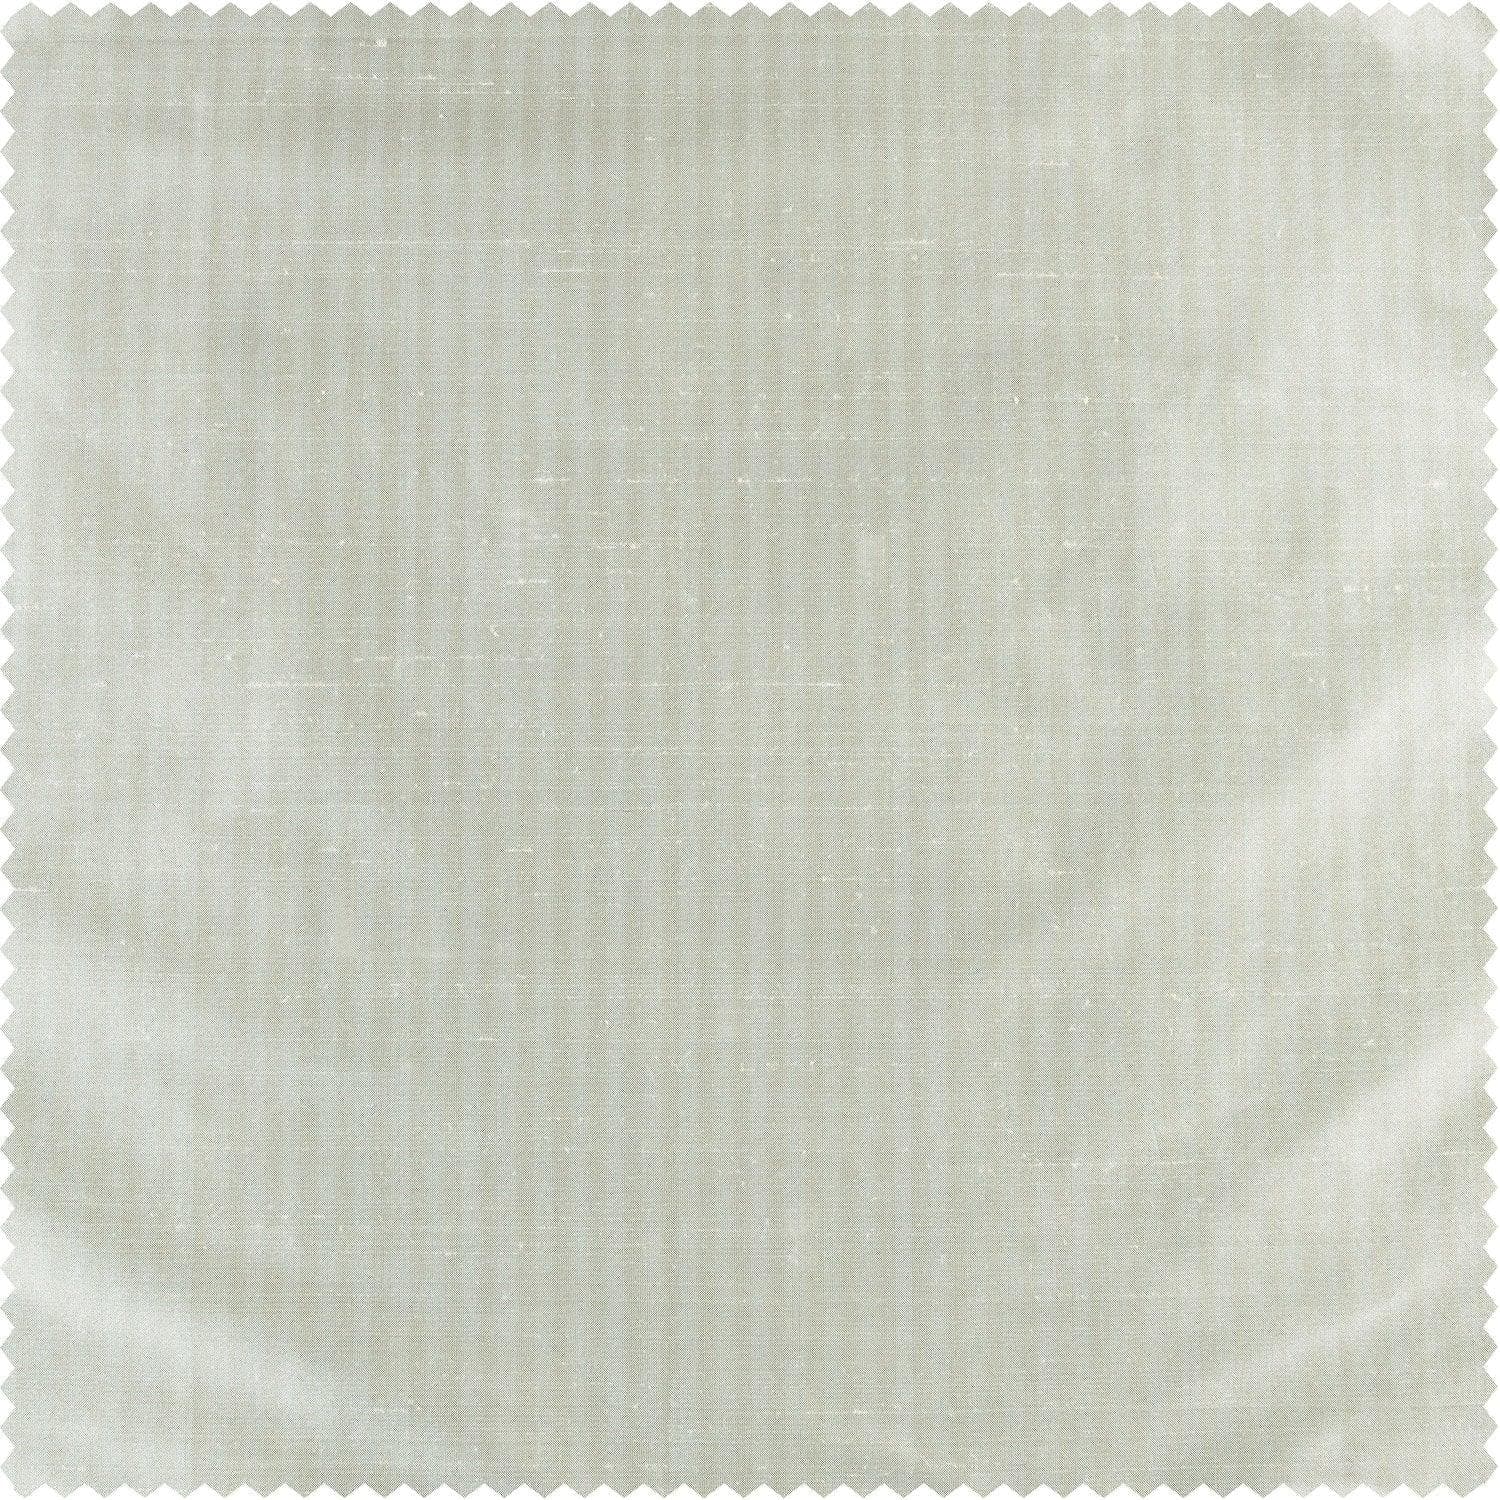 Cambridge White Striped Taffeta Silk Swatch